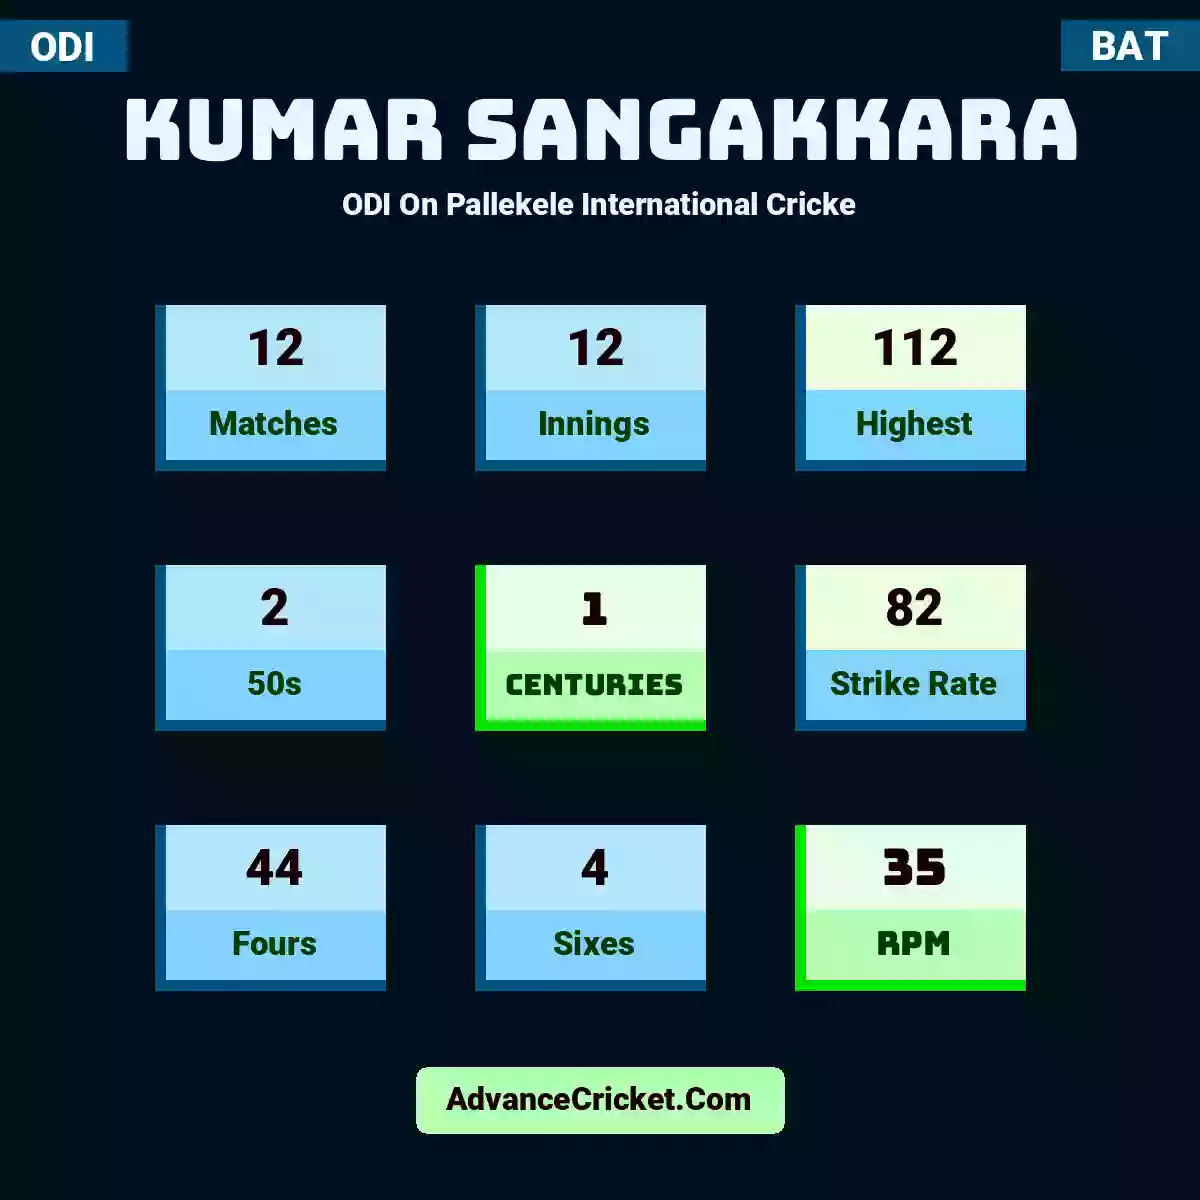 Kumar Sangakkara ODI  On Pallekele International Cricke, Kumar Sangakkara played 12 matches, scored 112 runs as highest, 2 half-centuries, and 1 centuries, with a strike rate of 82. K.Sangakkara hit 44 fours and 4 sixes, with an RPM of 35.